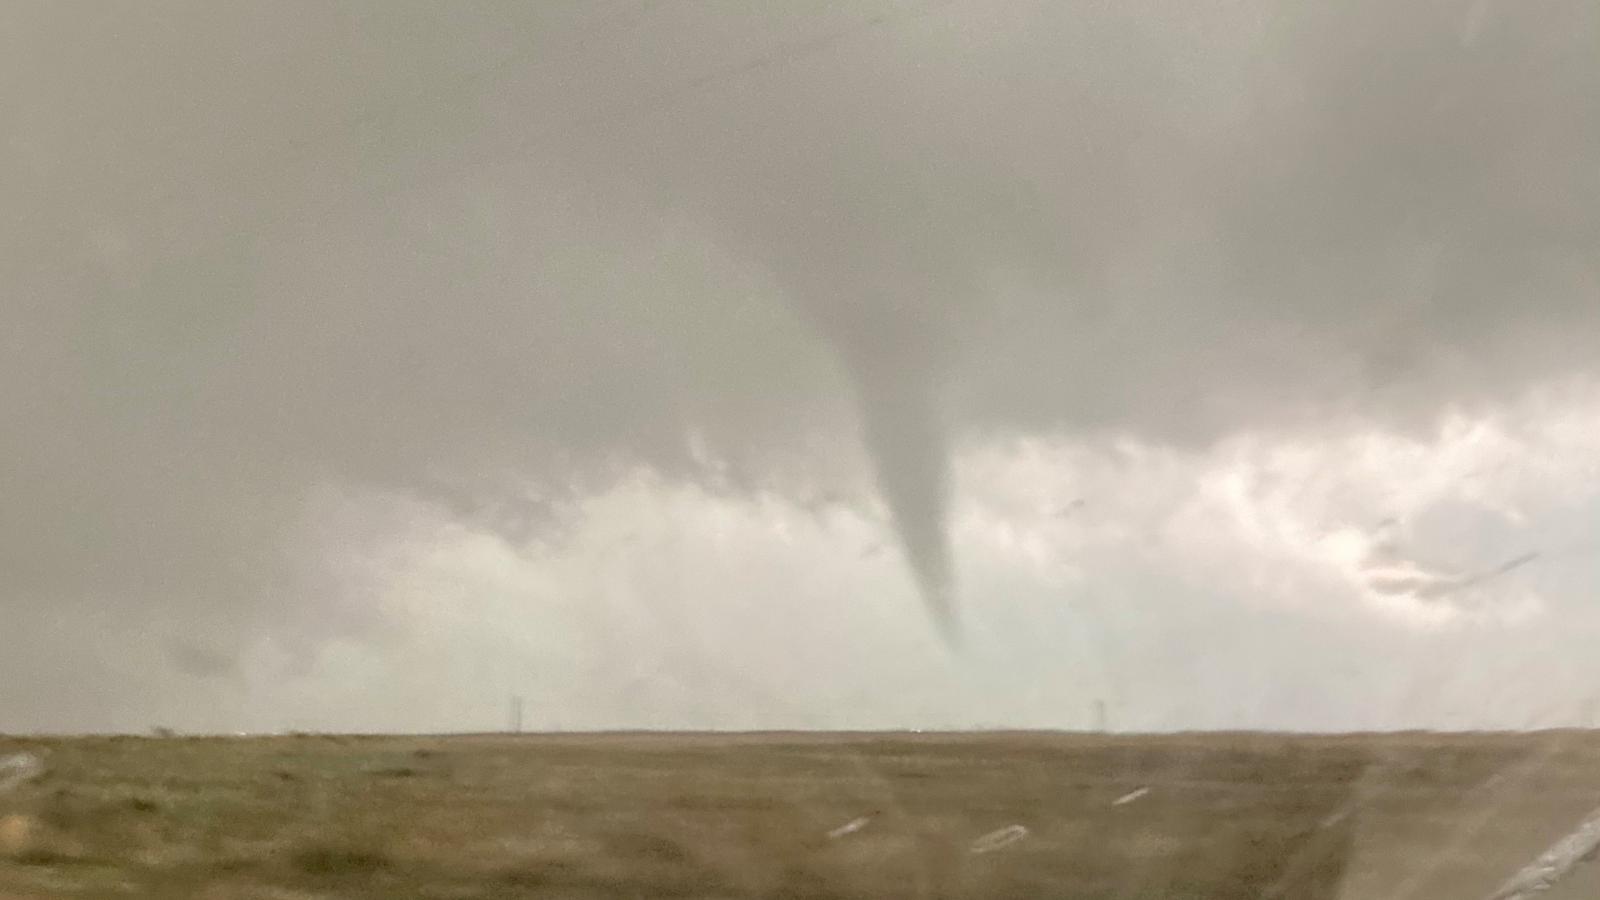 A second tornado east of Denver, CO on 5/10 (photo credit: Jana Houser)